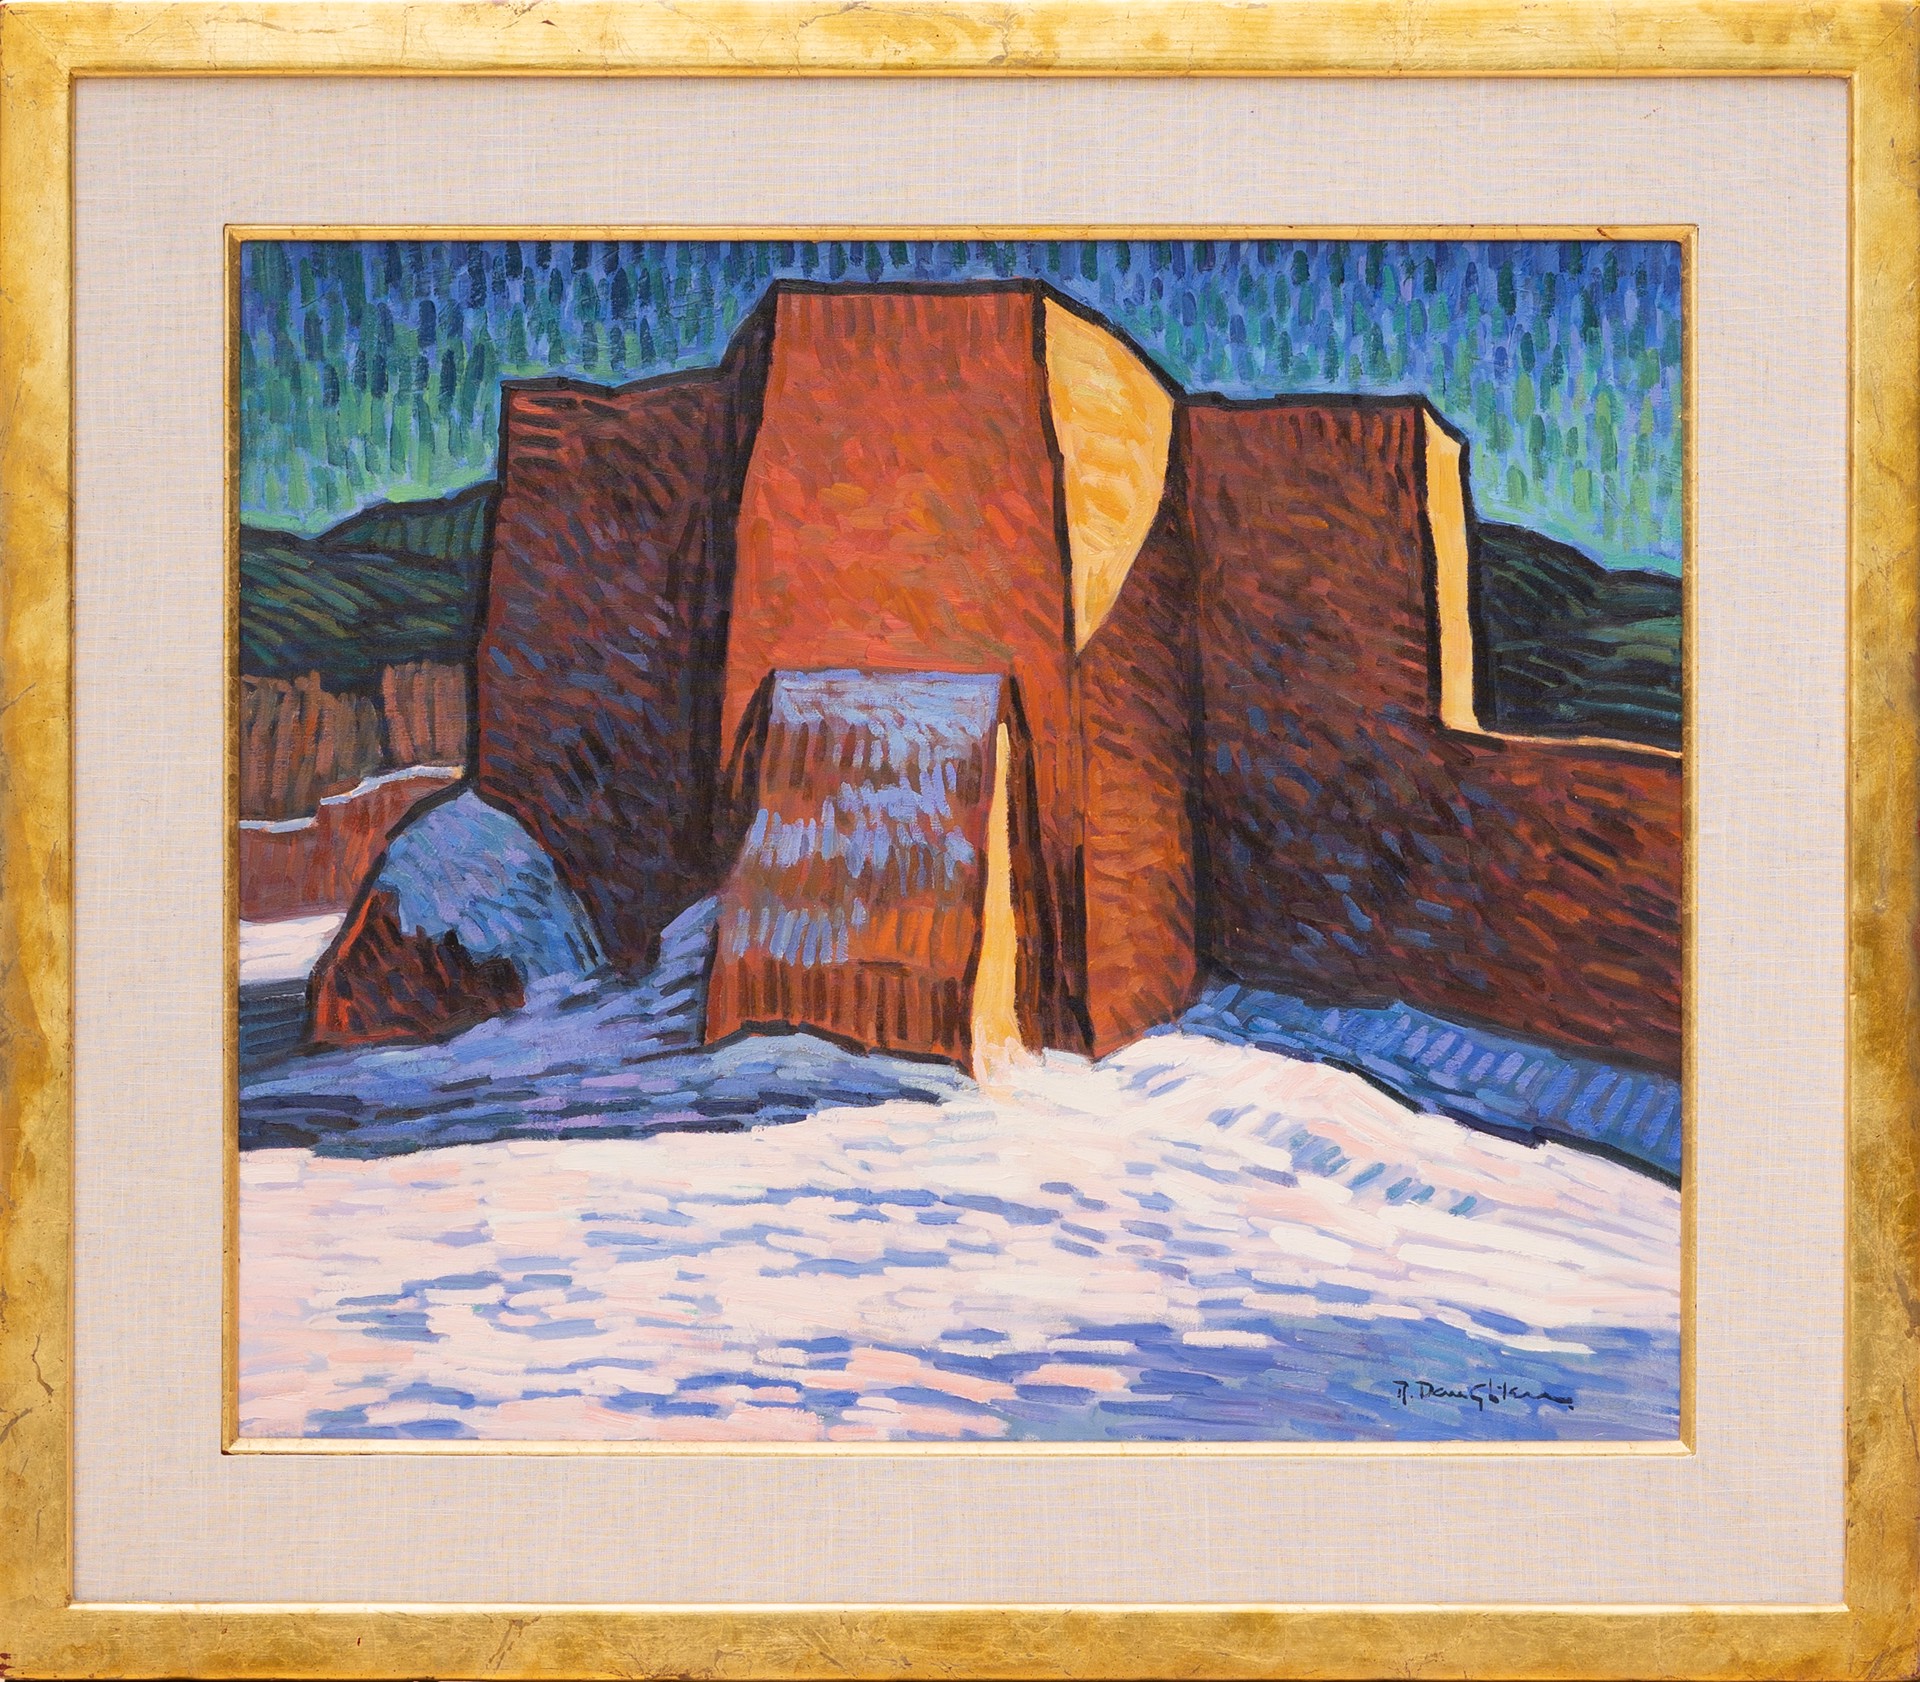 Ranchos Winter by Robert Daughters (1929-2013)